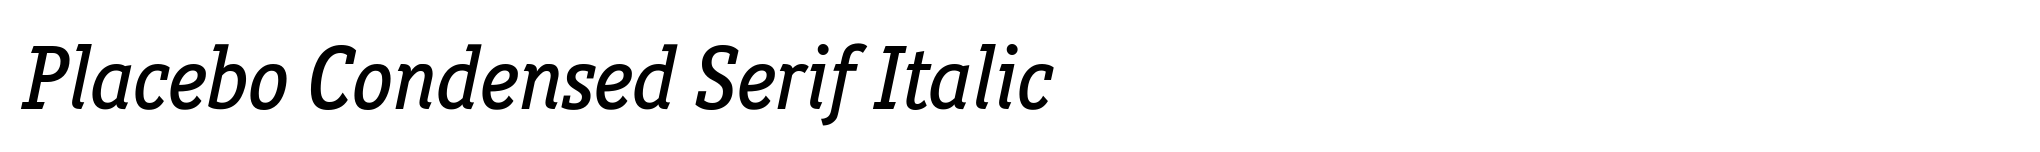 Placebo Condensed Serif Italic image